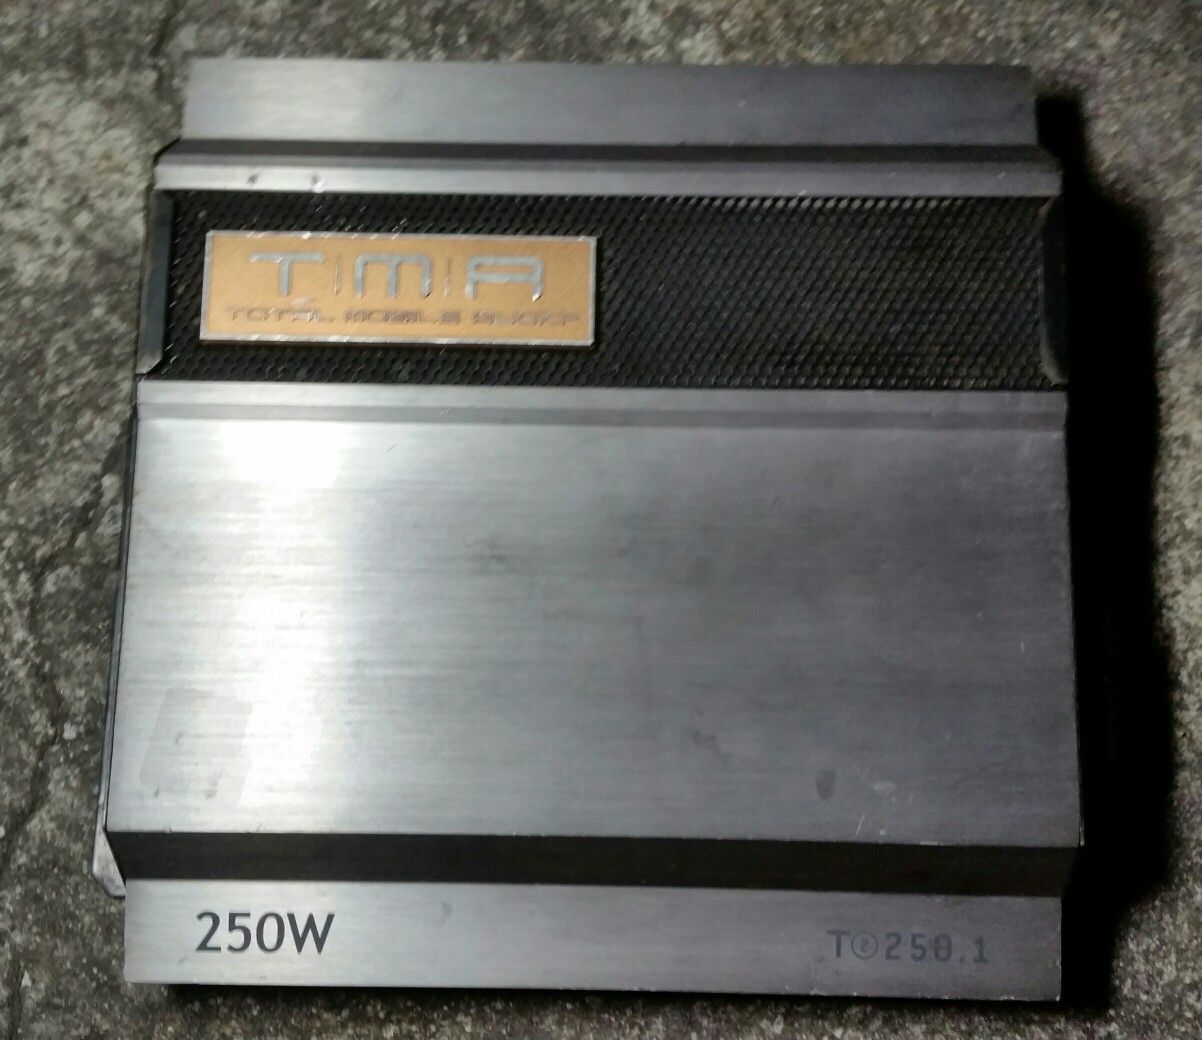 Jl audio amplifier